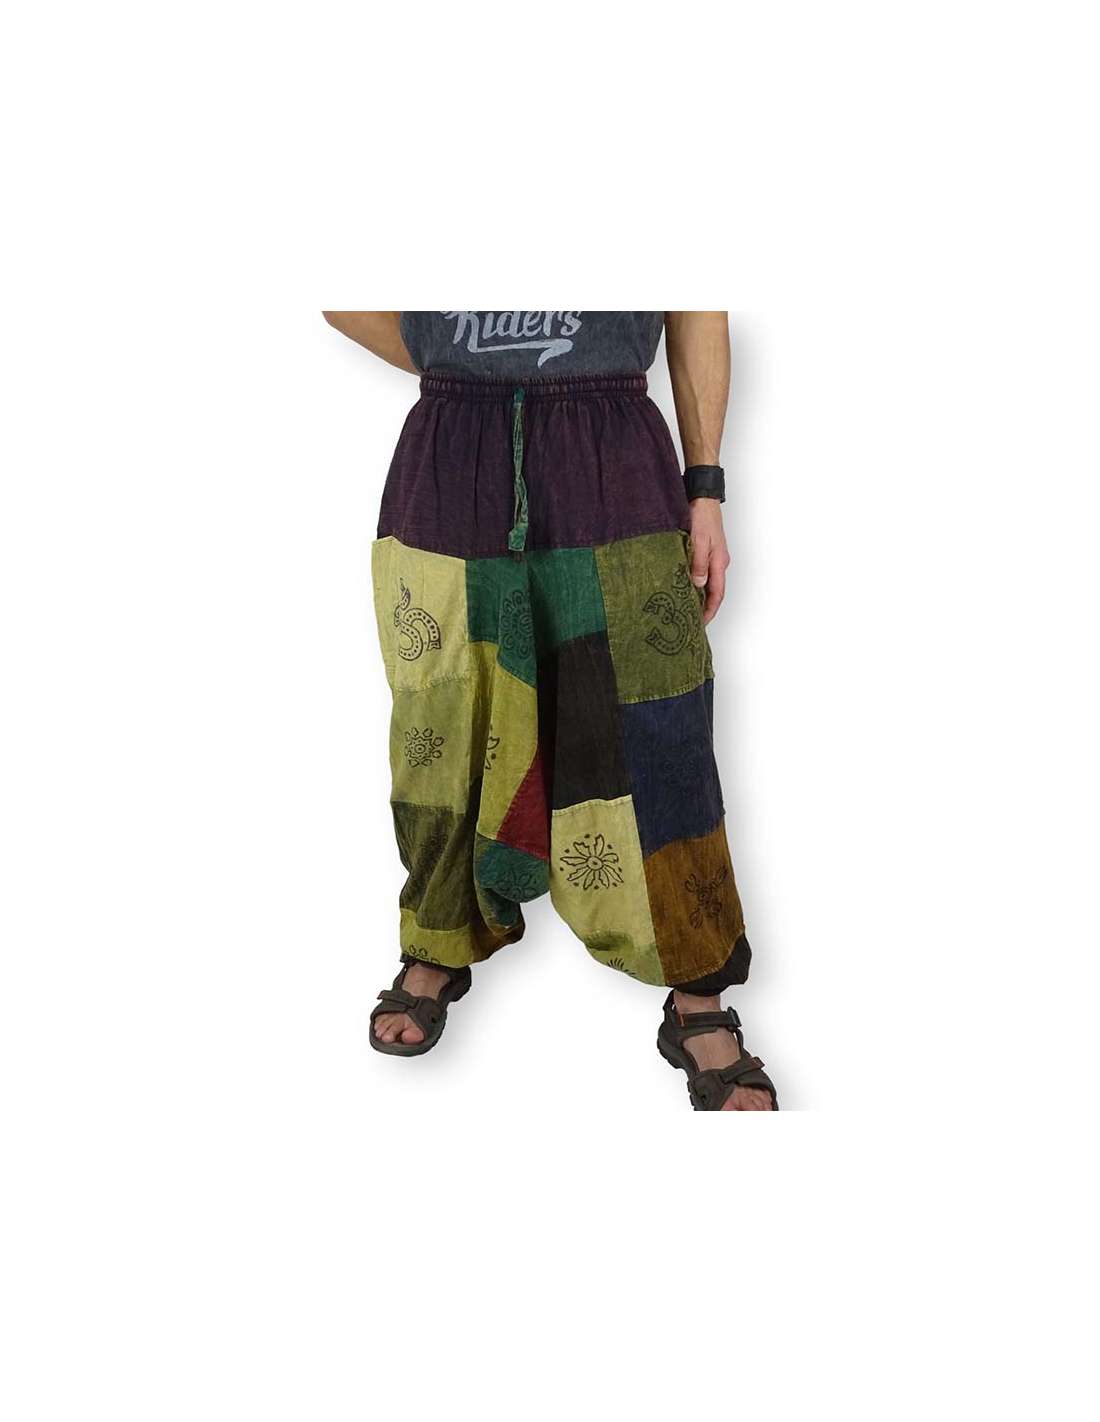 https://www.curiosidadesyalgomas.com/23317-thickbox_default/pantalon-bombacho-hippie-patchwork.jpg